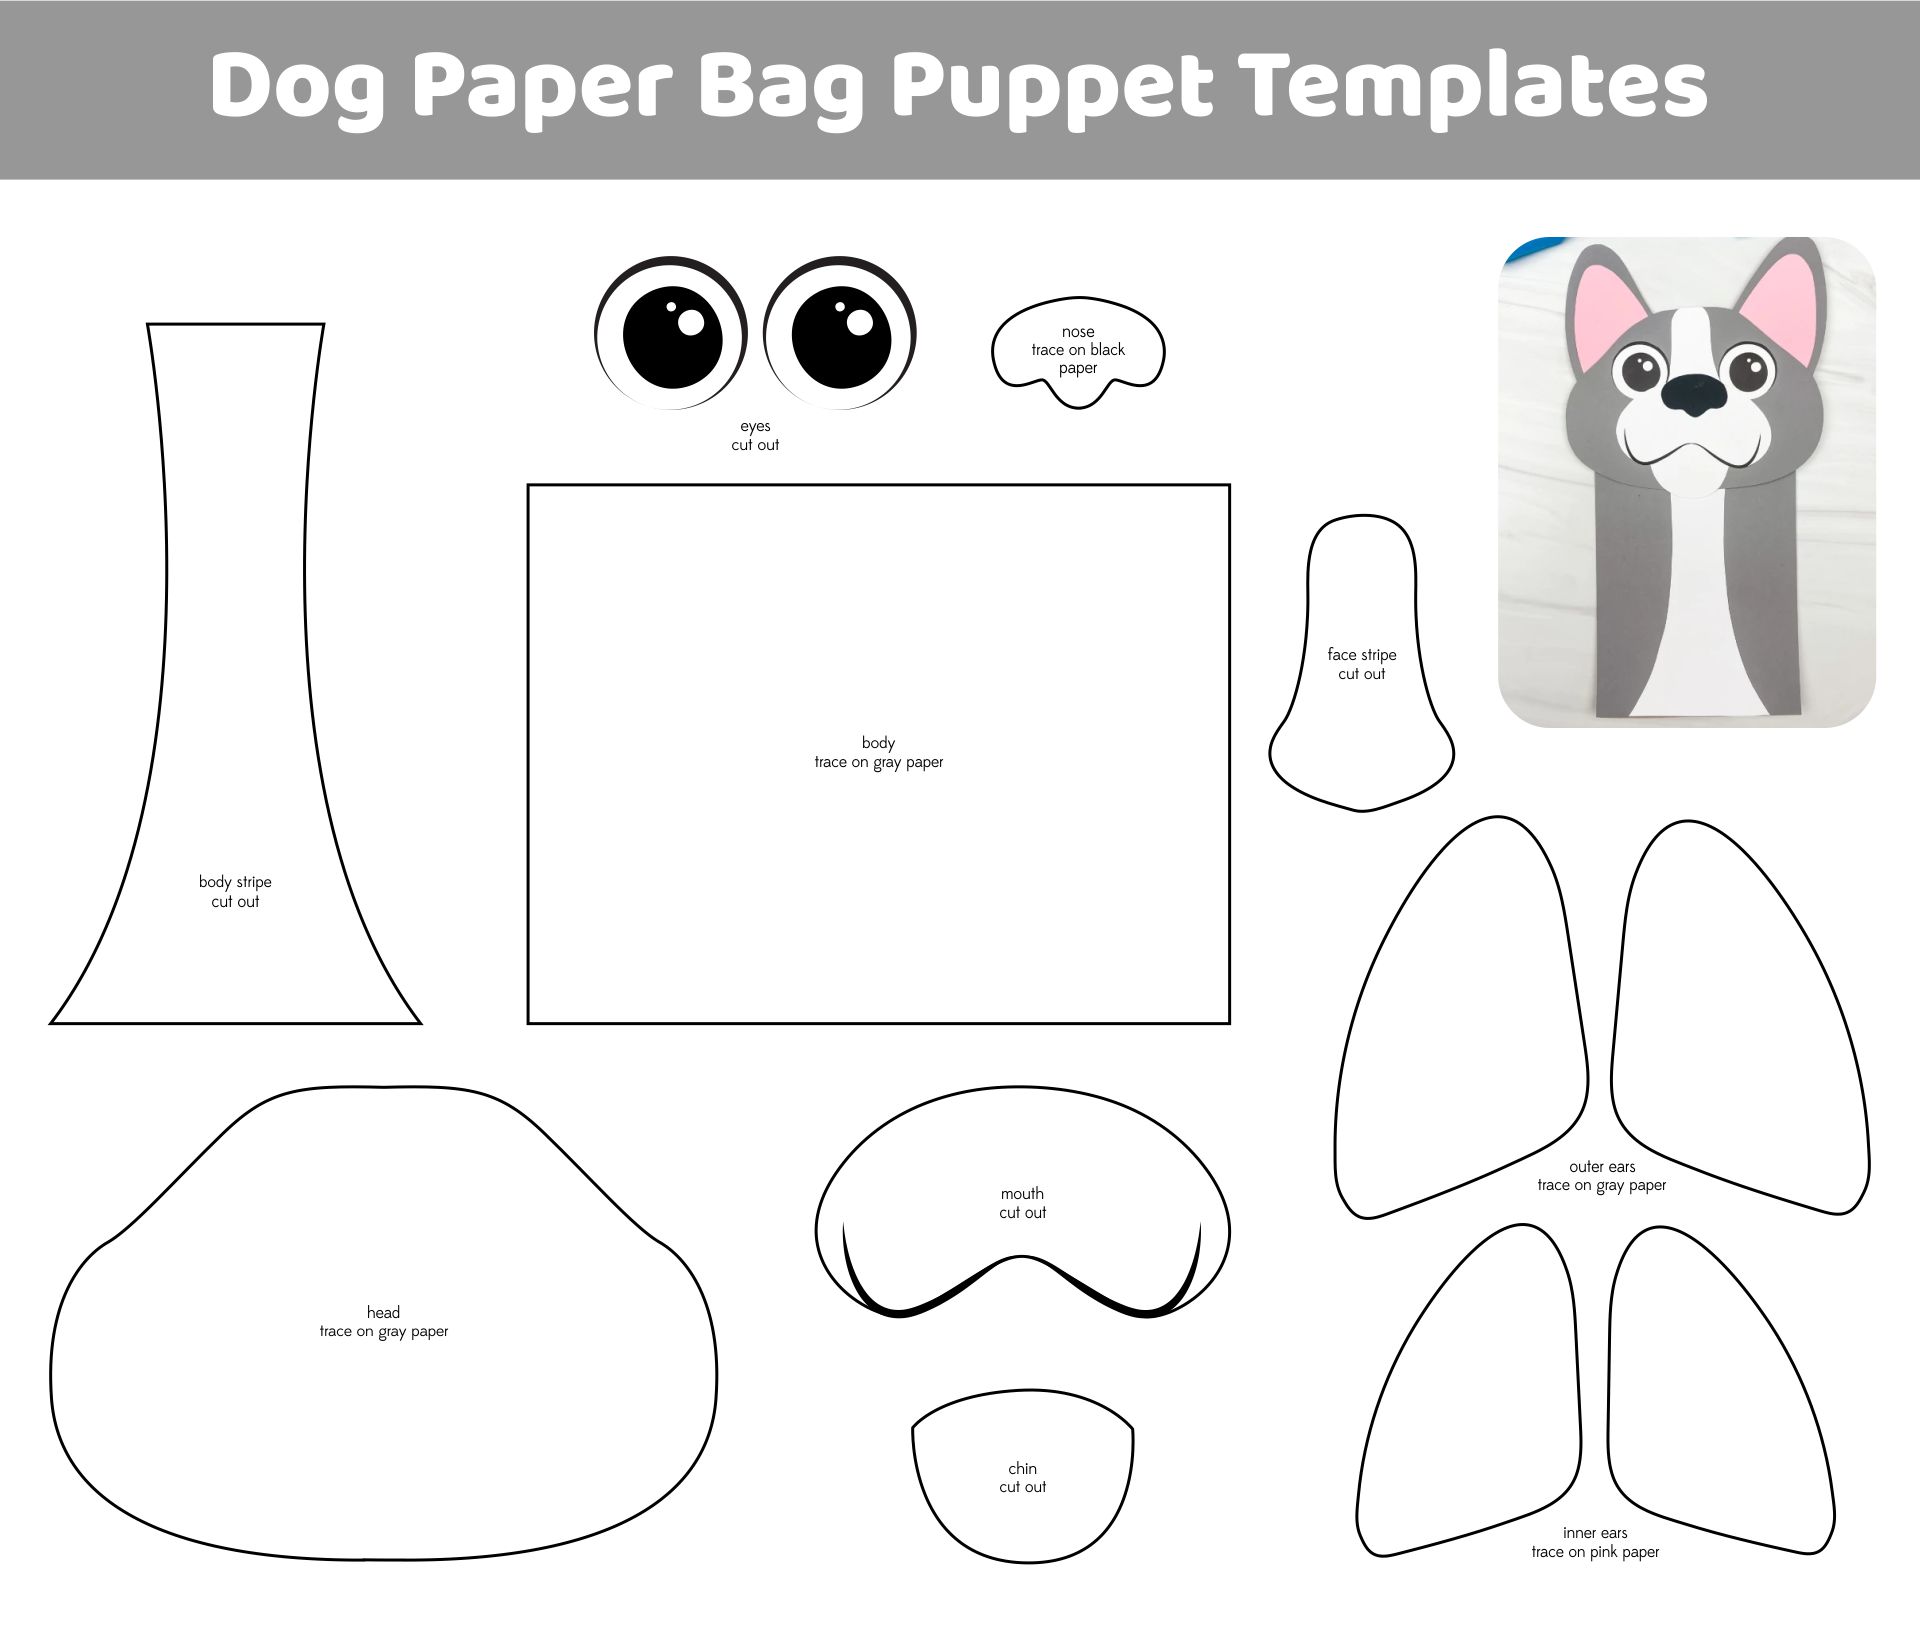 Dog Paper Bag Puppet Templates